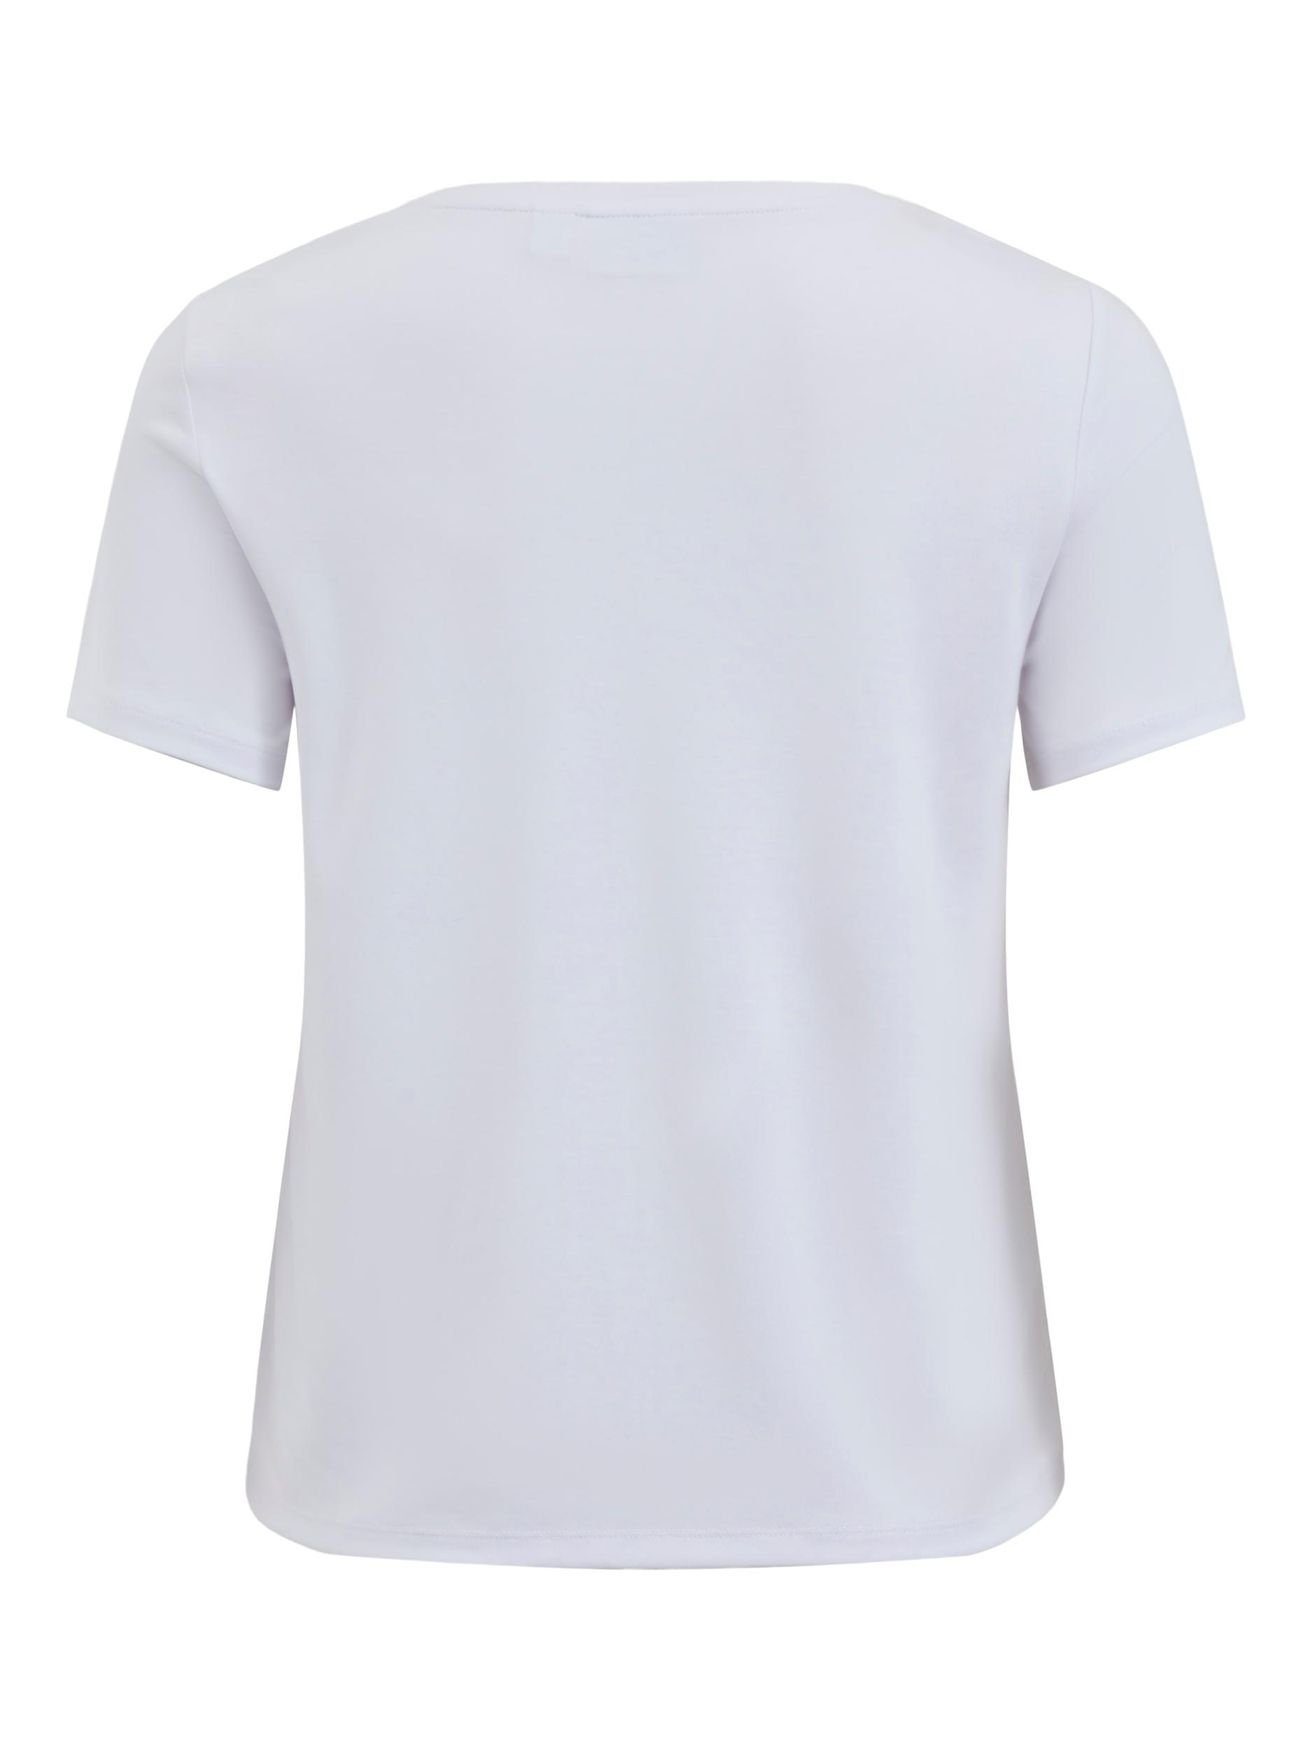 Vila T-Shirt Basic T-Shirt Top Kurzarm Rundhals VIMODALA 4870 in Weiß Oberteil